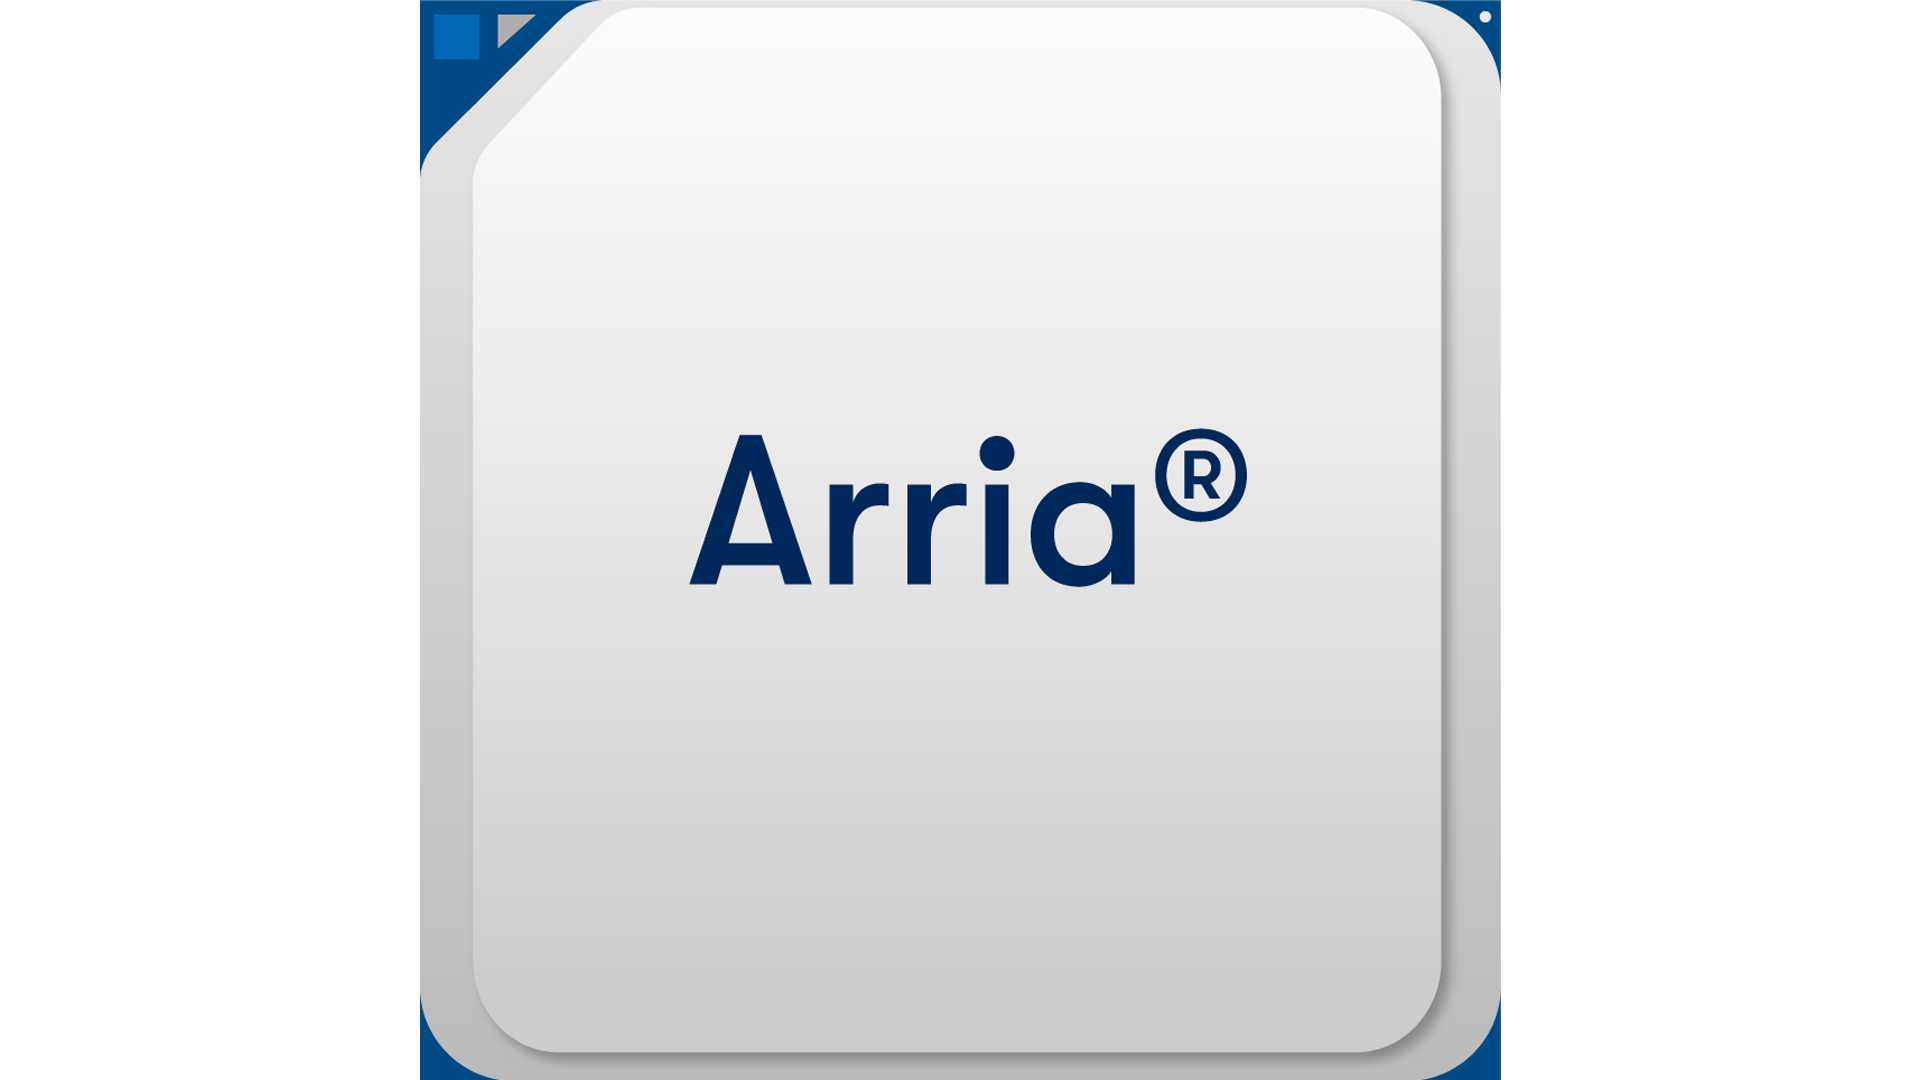 Arria® V 5AGXA7 FPGA